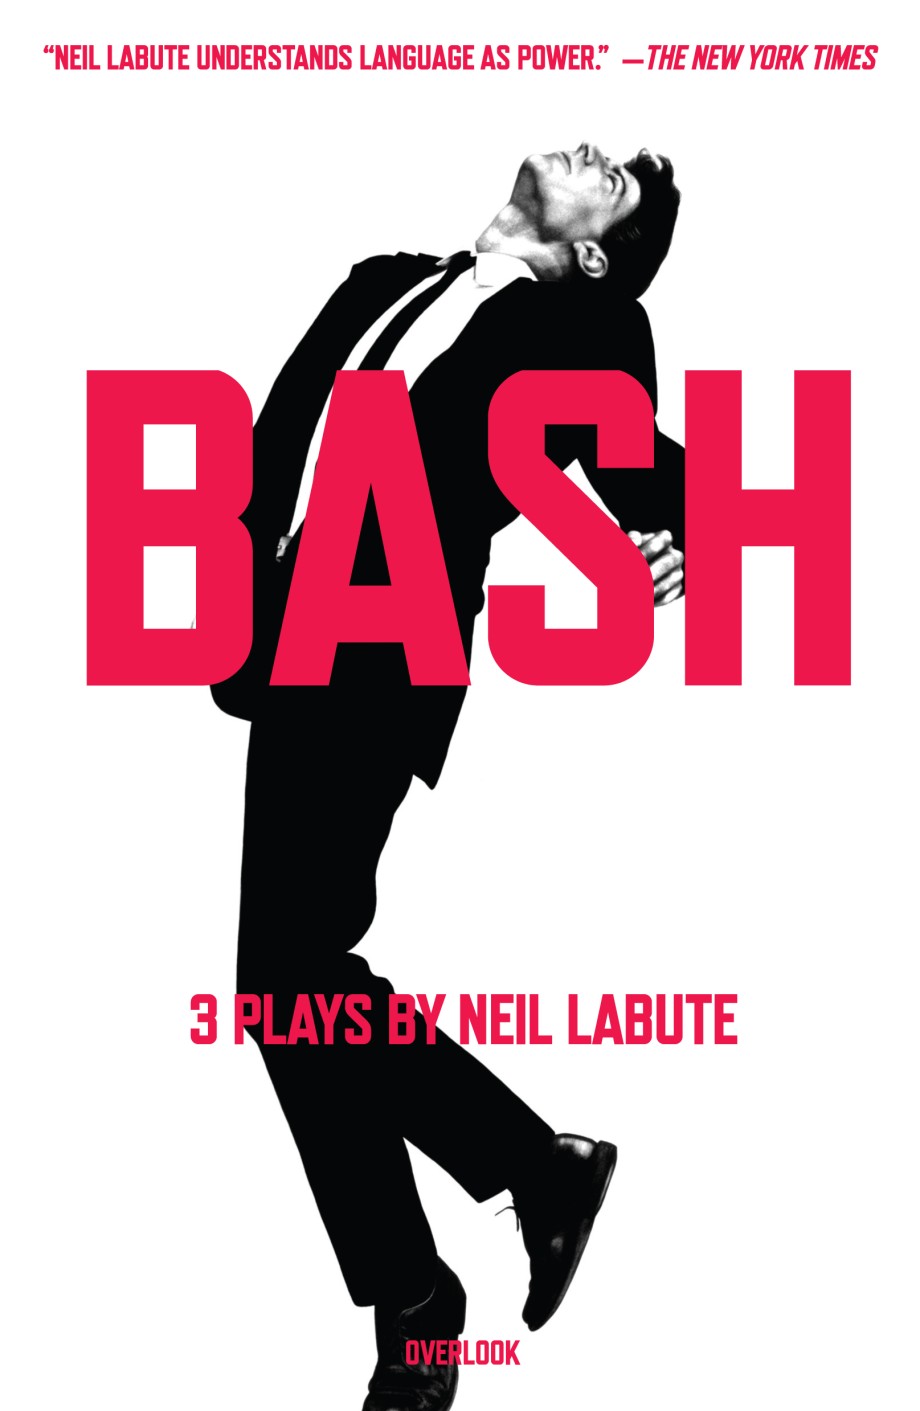 Bash Three Plays